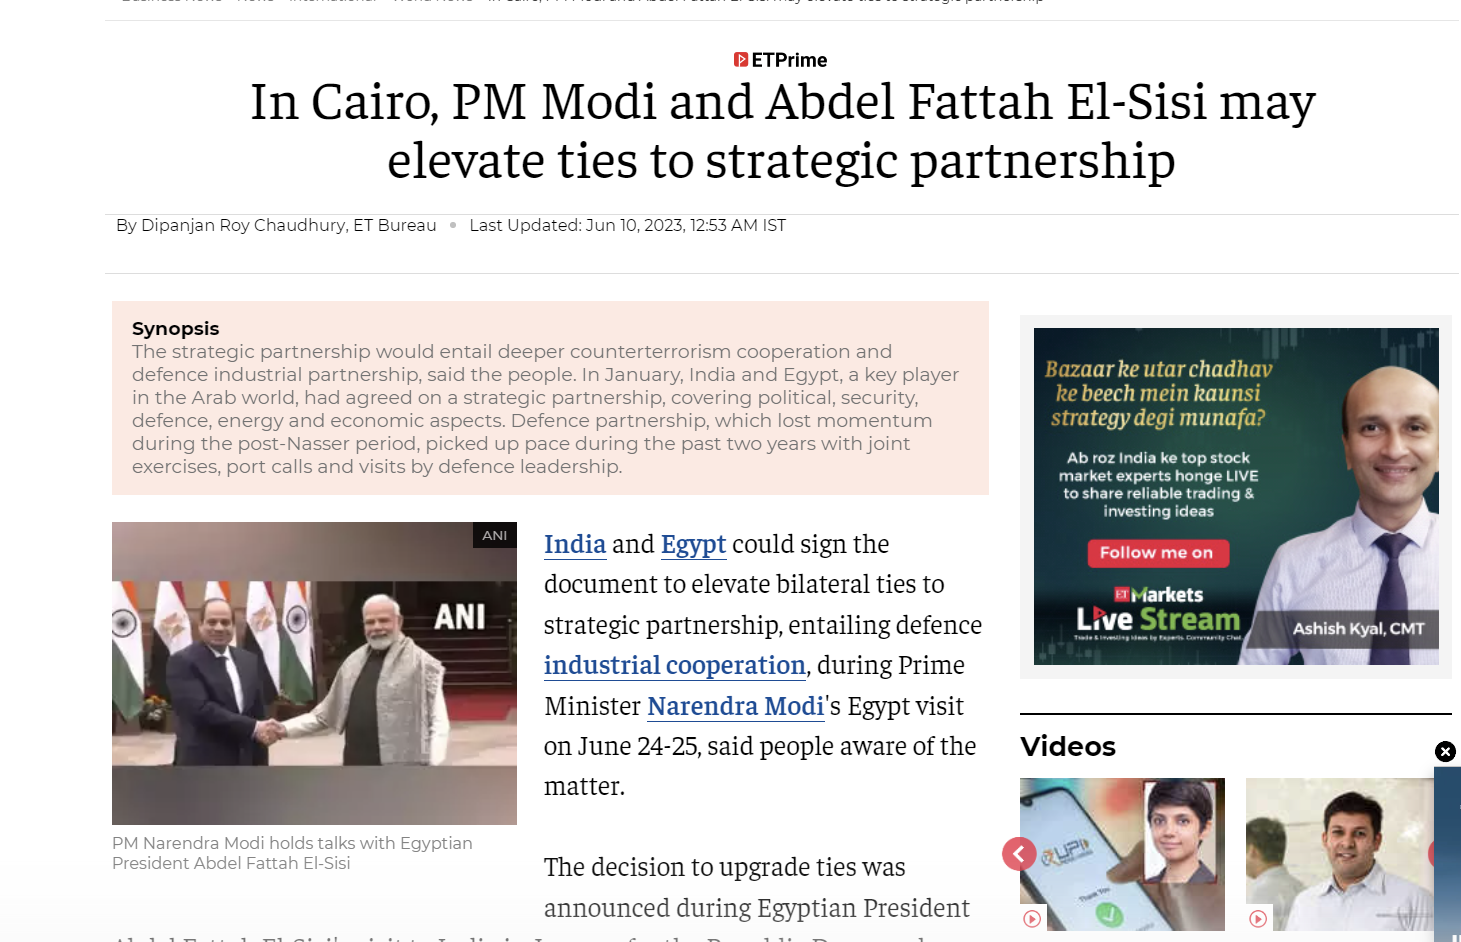 Economic Times: Στο Κάιρο Μόντι και Σίσι ενδέχεται να αυξήσουν τους στρατηγικούς τους δεσμούς